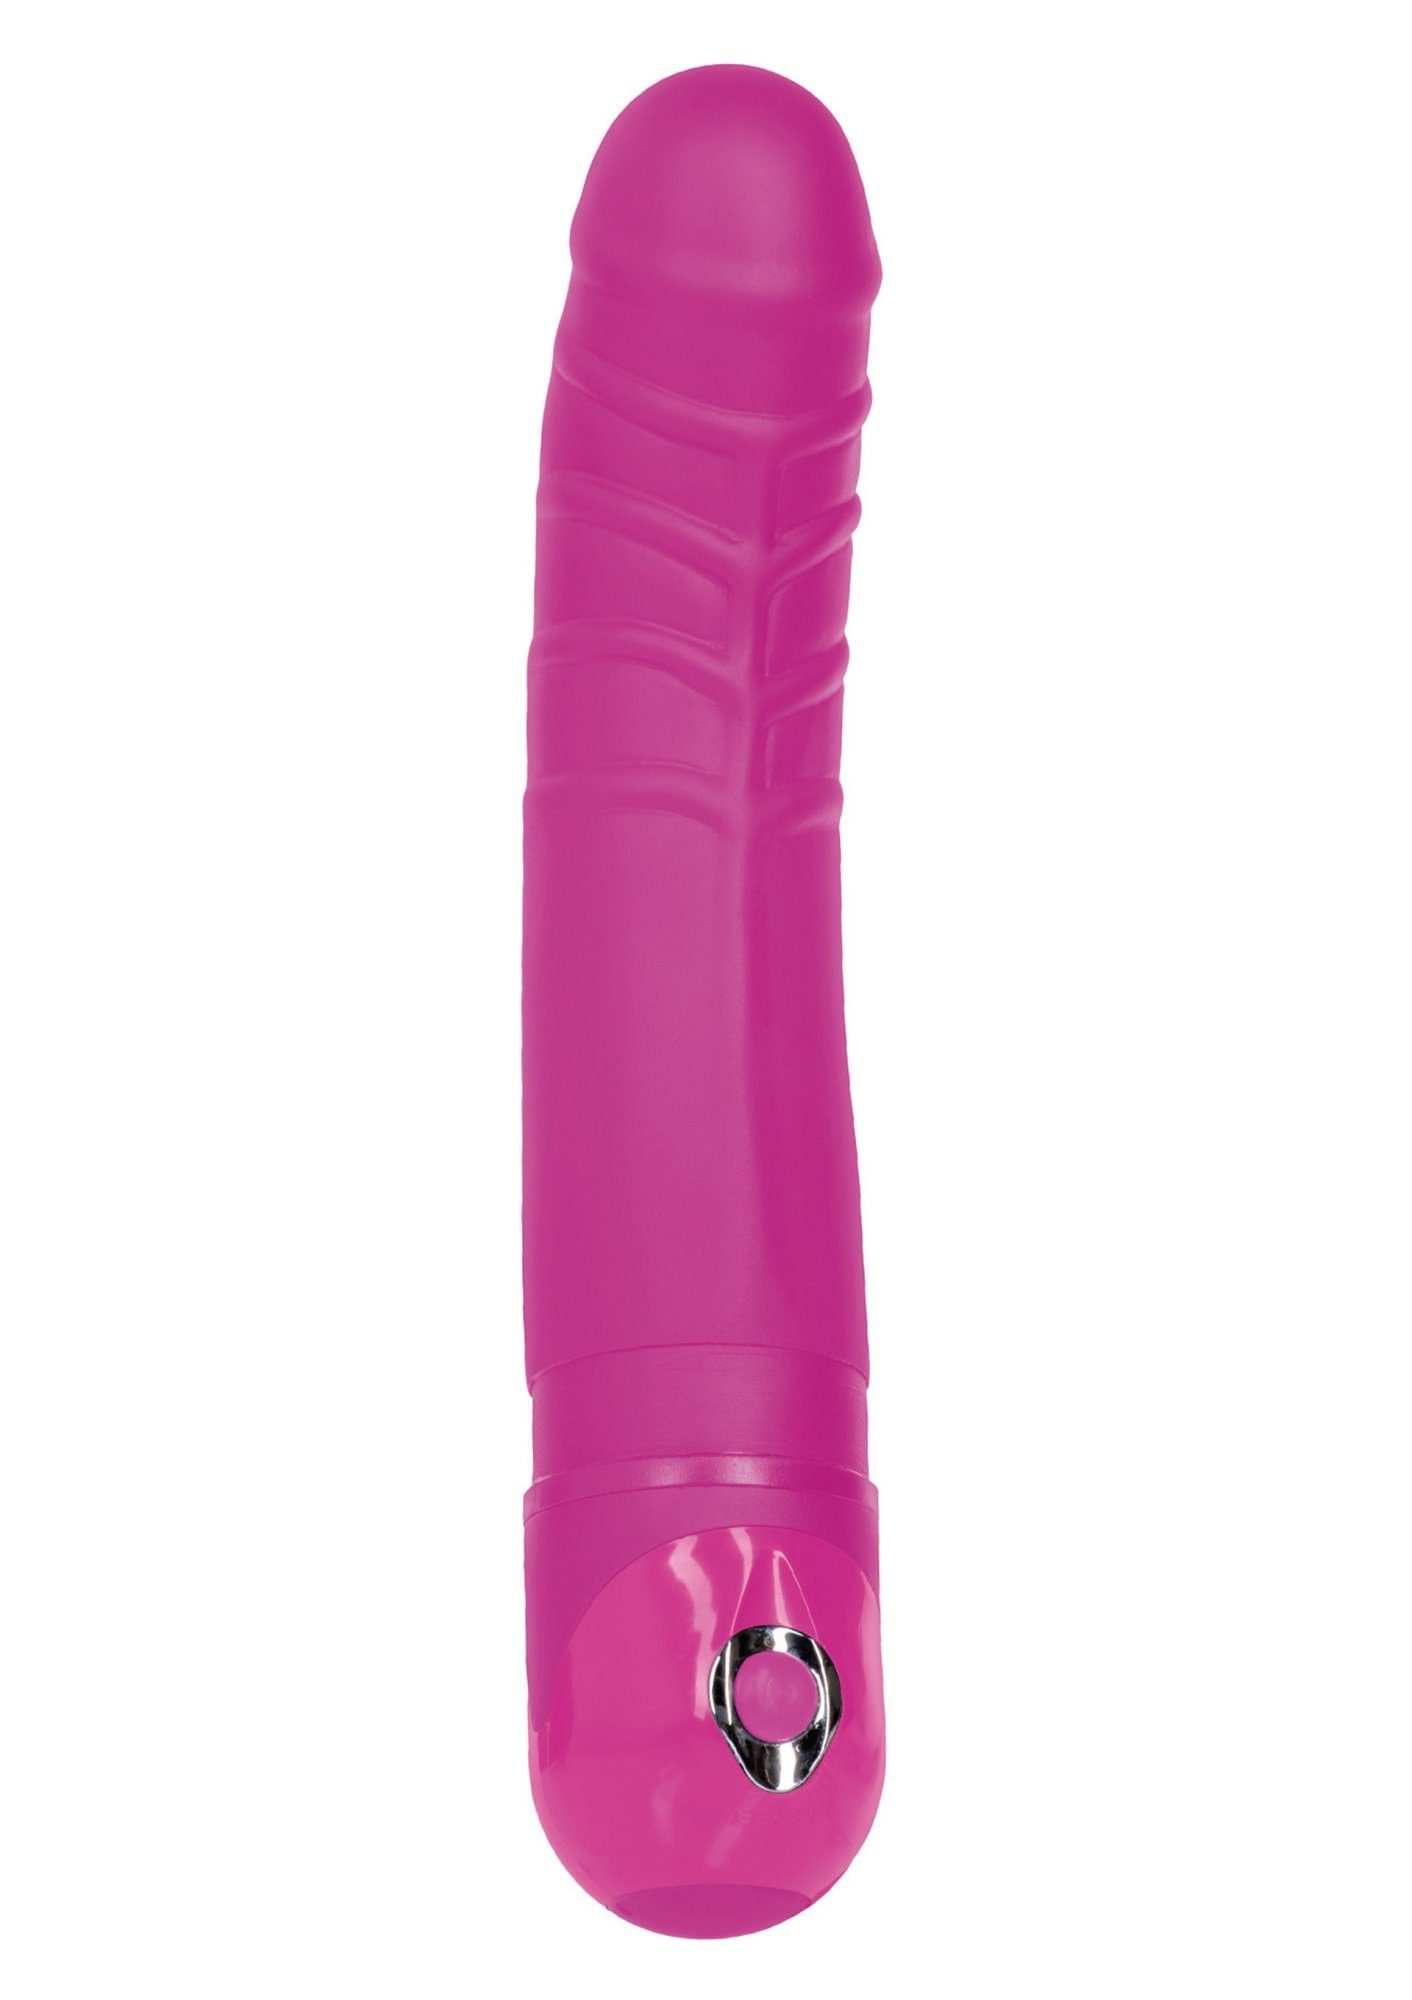 California Exotic Novelties Vibrator Bendie Stud Little Guy Vibrator - pink